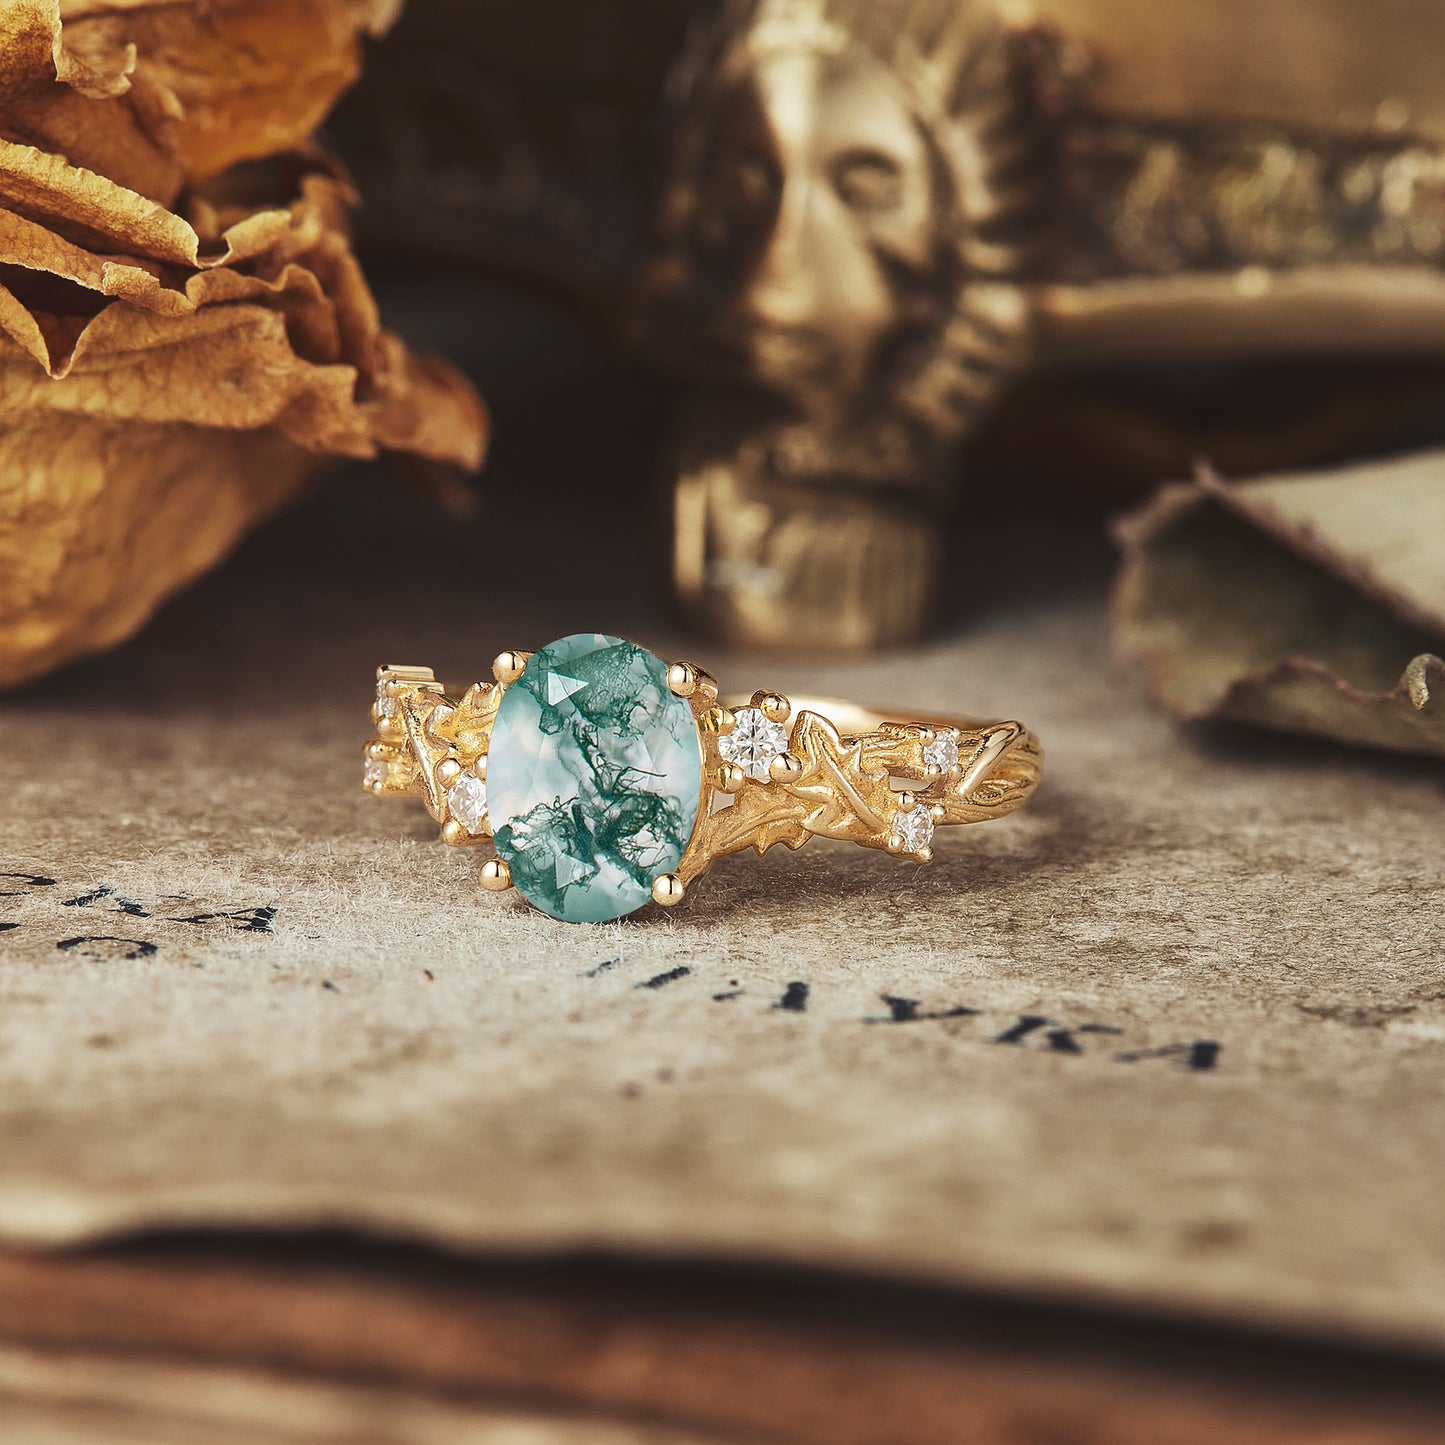 Maple Leaf Design Inspired Engagement Ring - Ariel